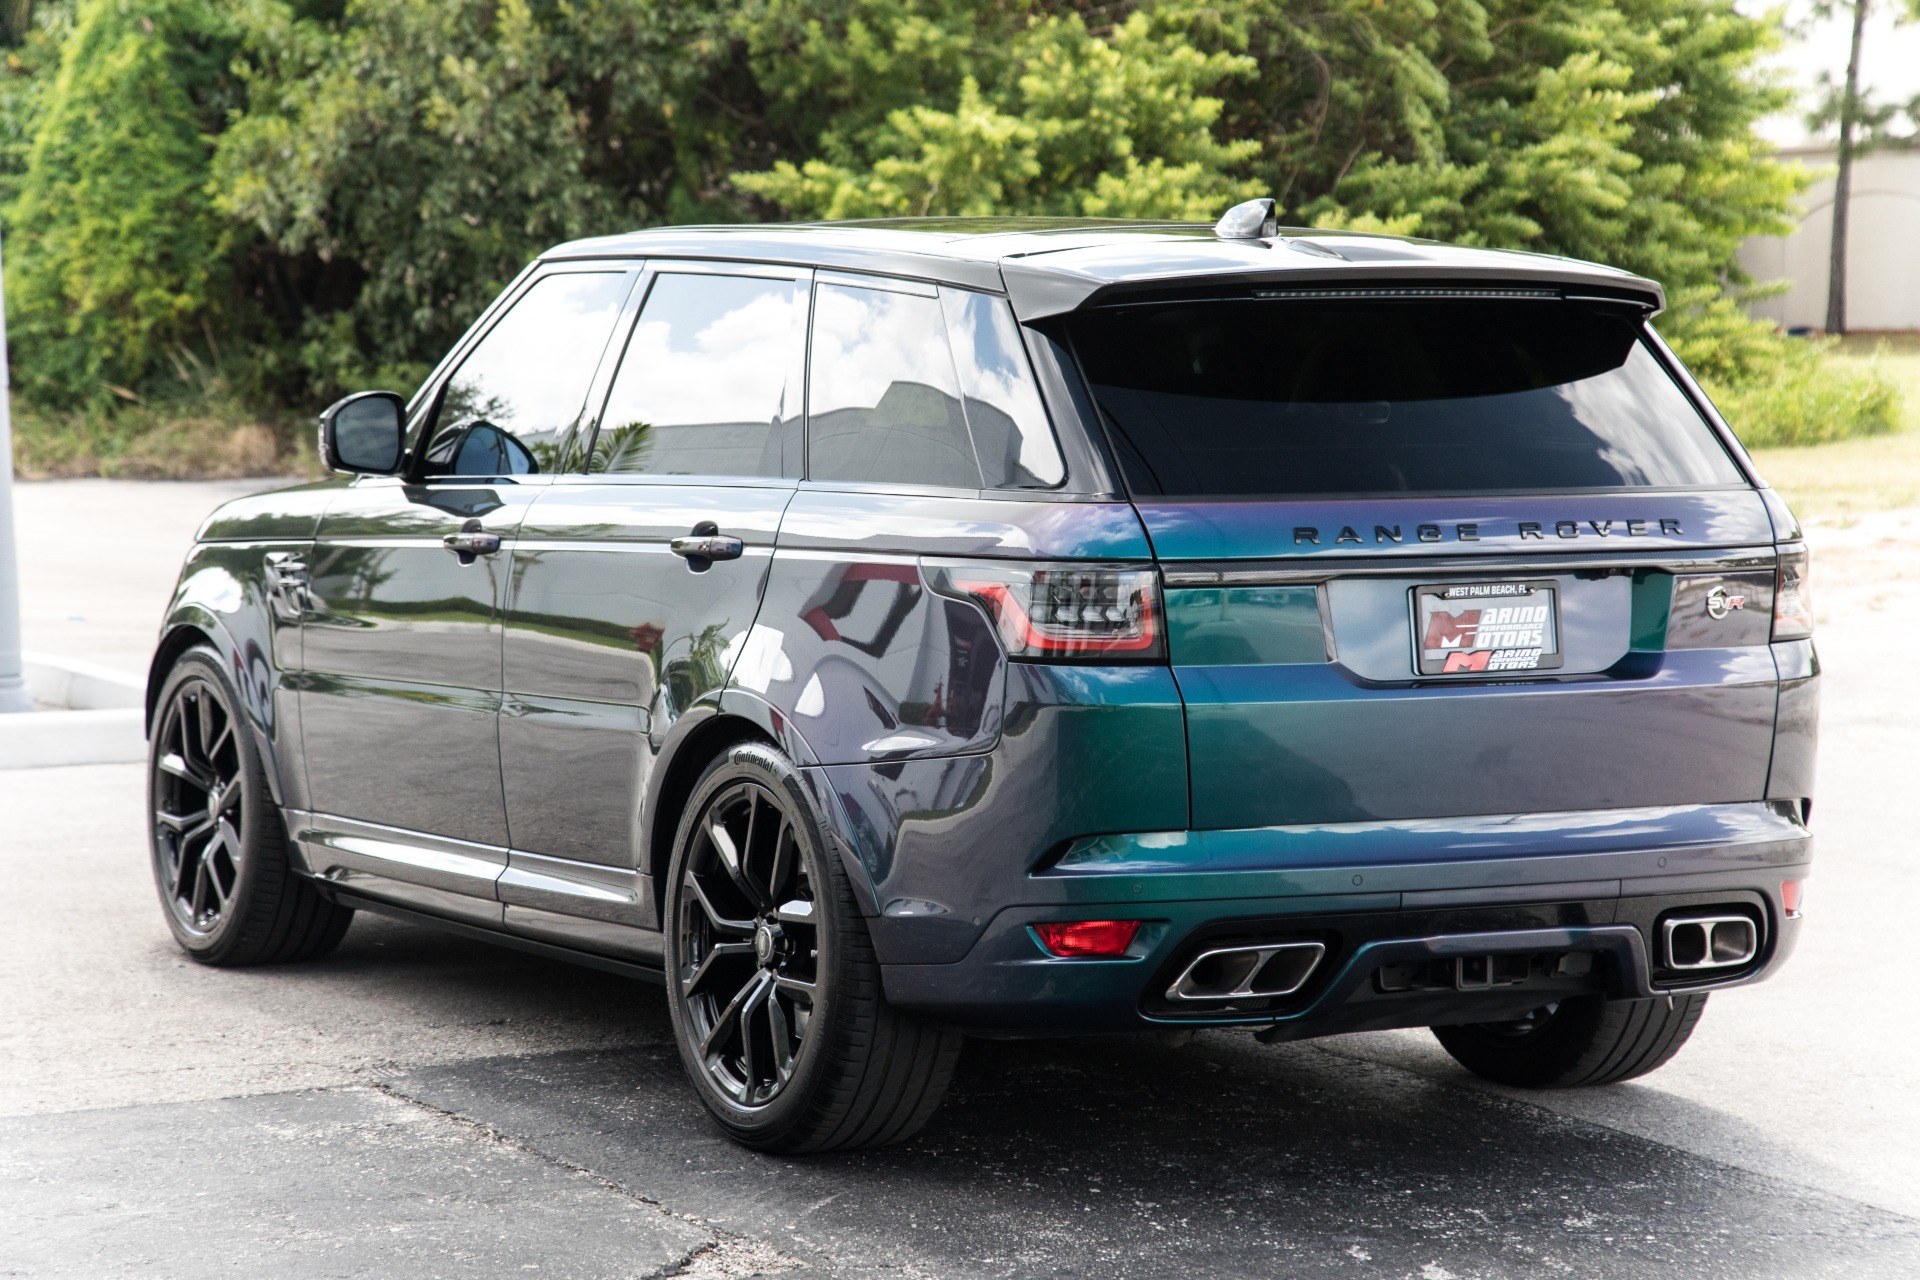 Used 2018 Land Rover Range Rover Sport SVR For Sale ($114,000) | Marino